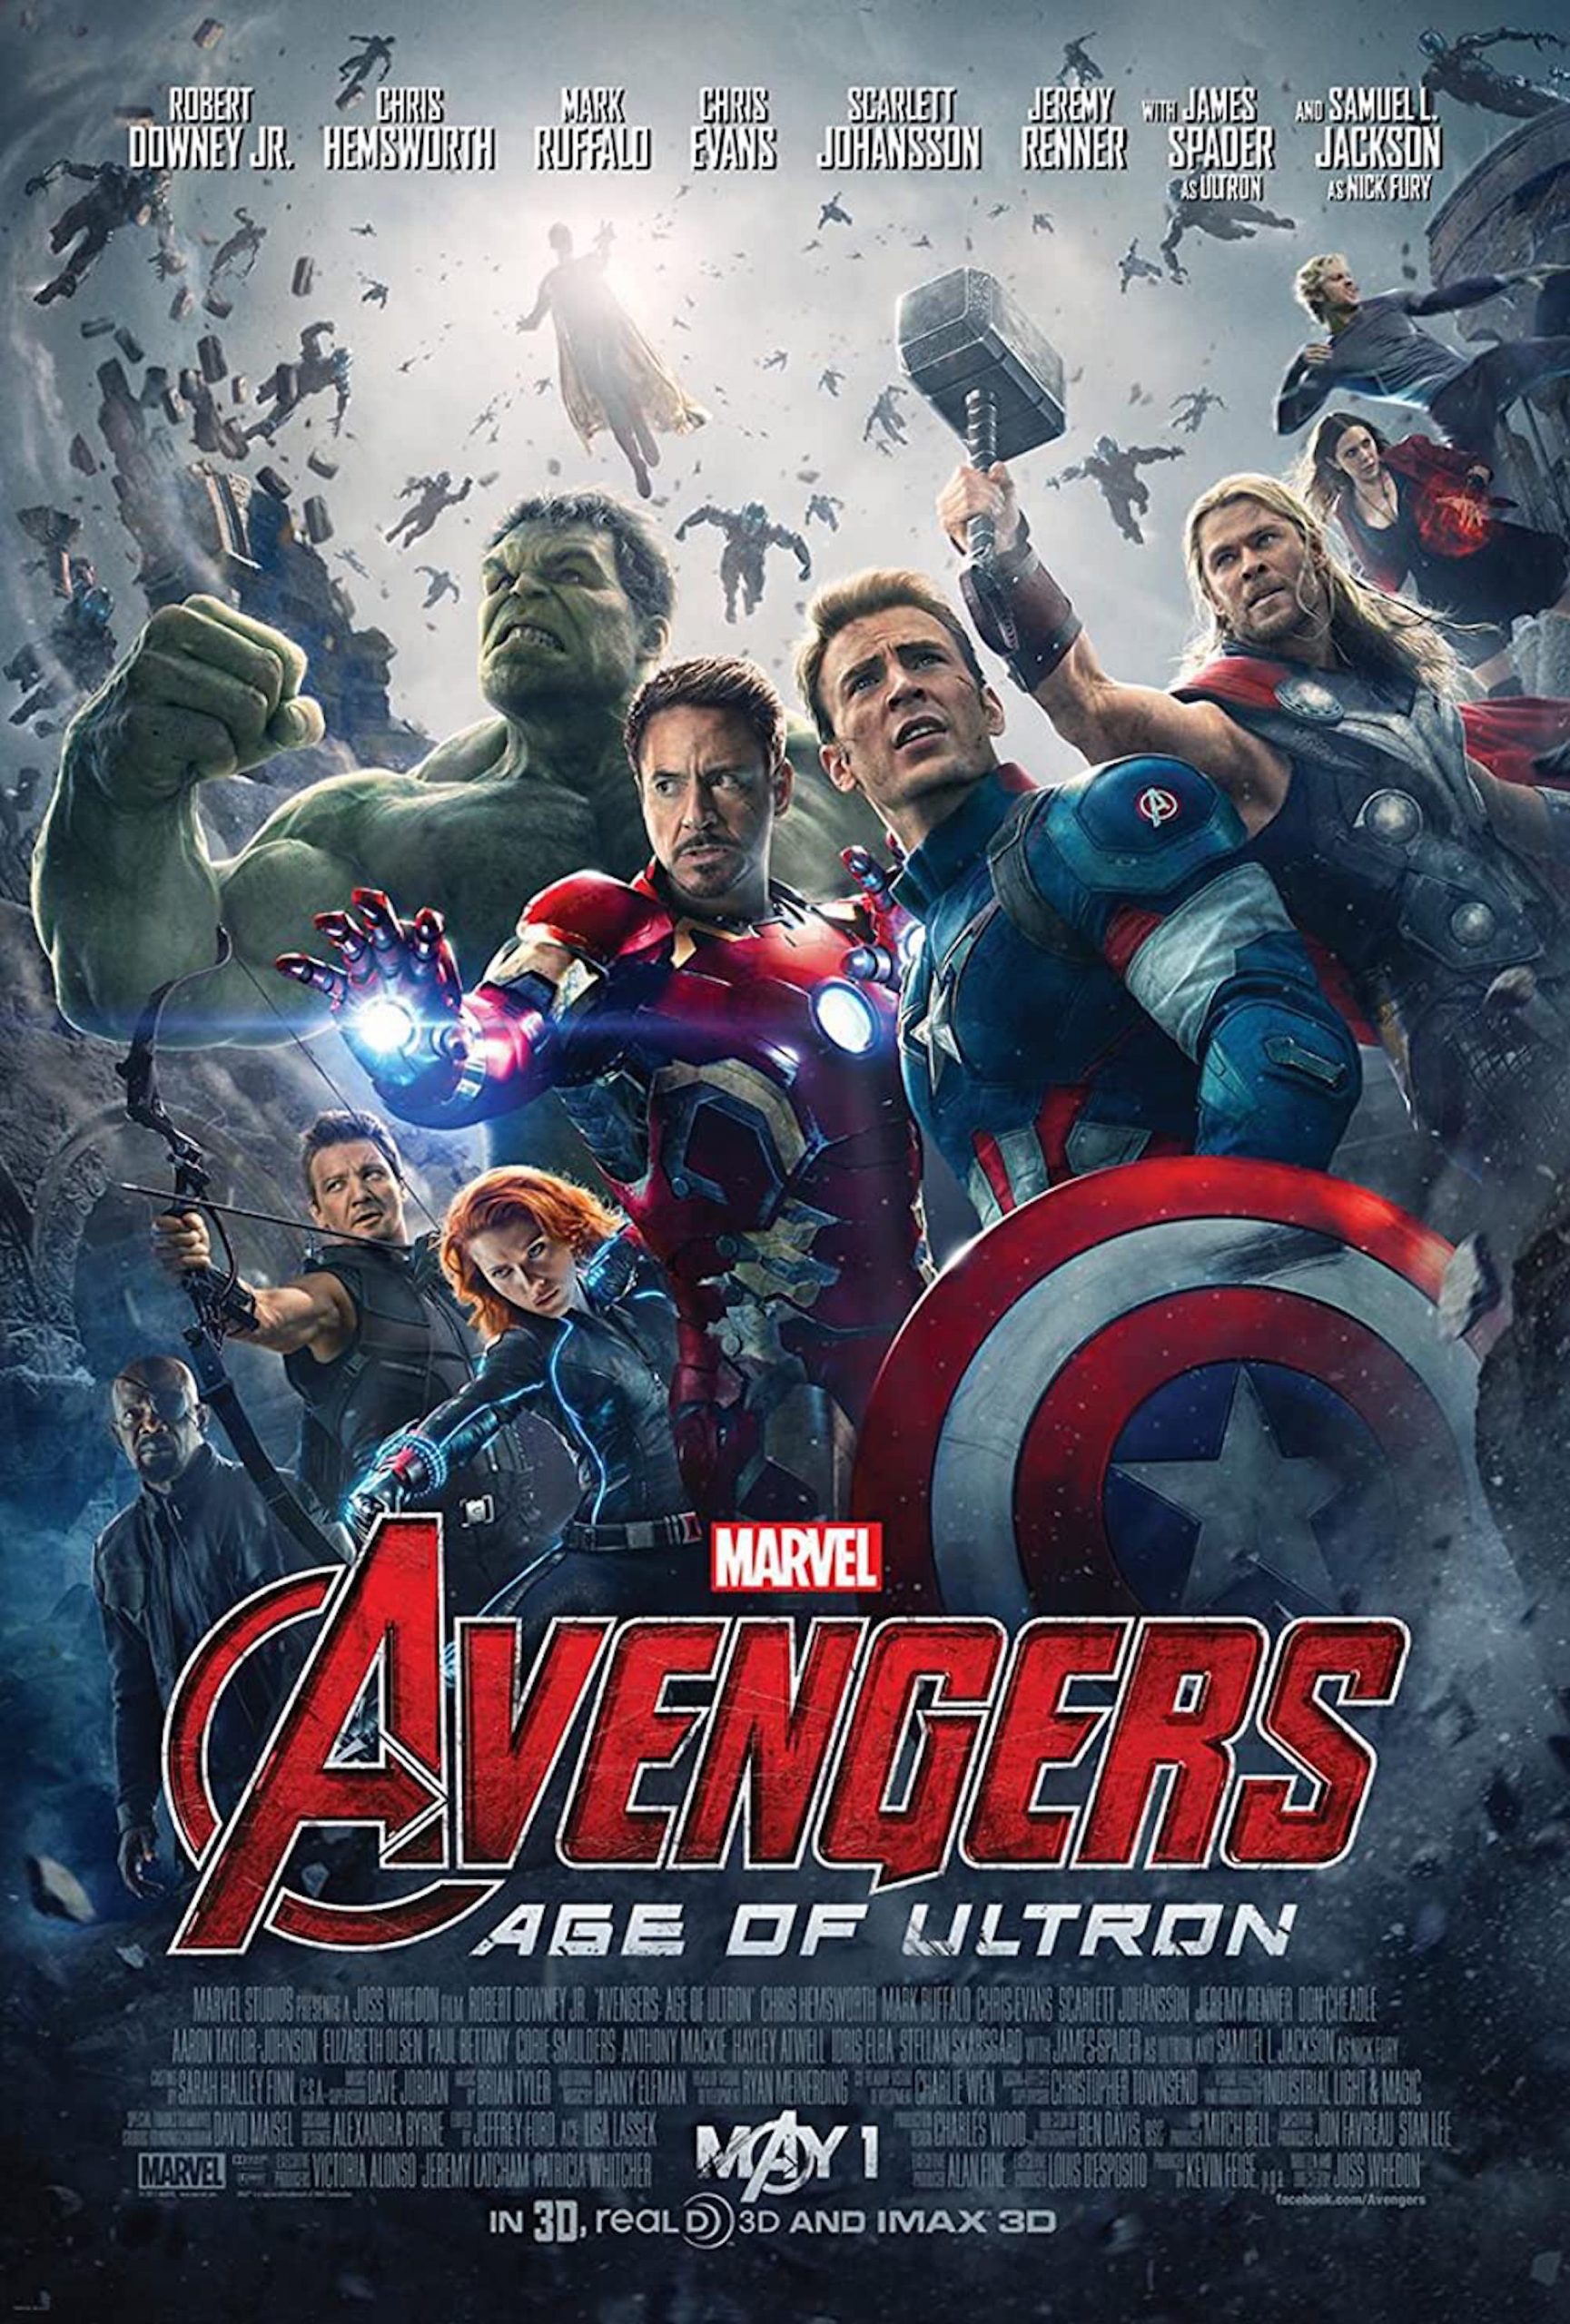 2015 Avengers Age of Ultron, Marvel Studio